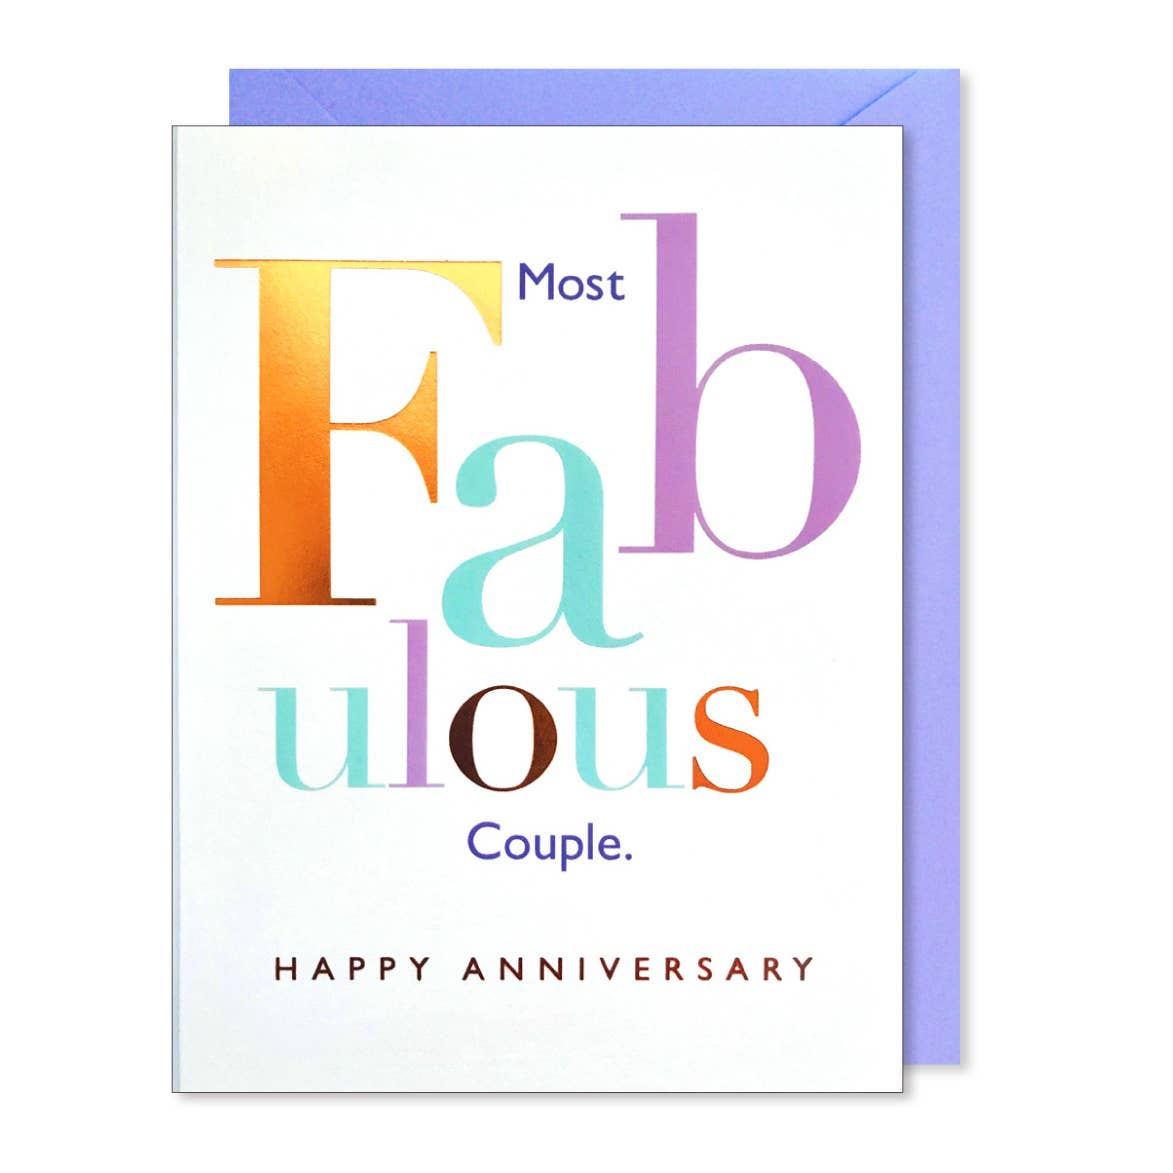 Fabulous Couple Anniversary card